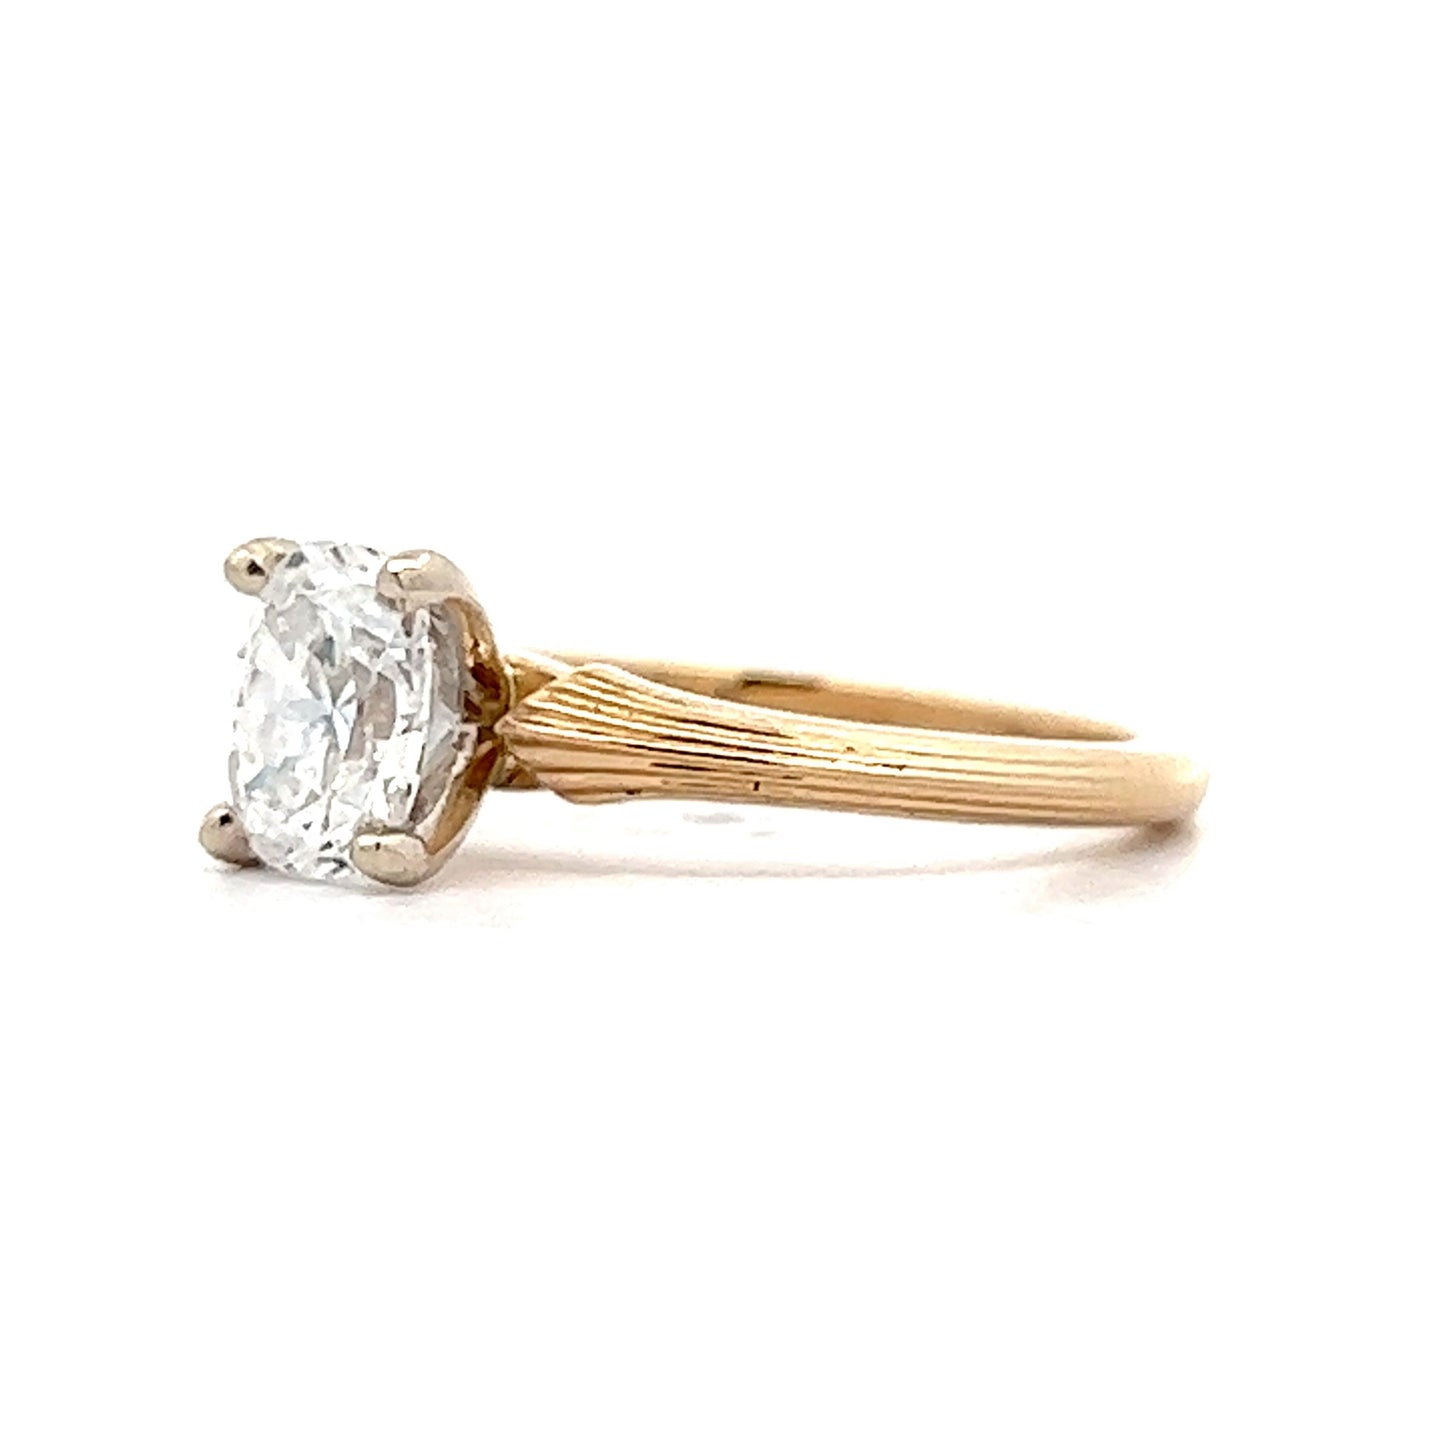 1.01 Cushion Cut Diamond Engagement Ring in 14k Yellow Gold